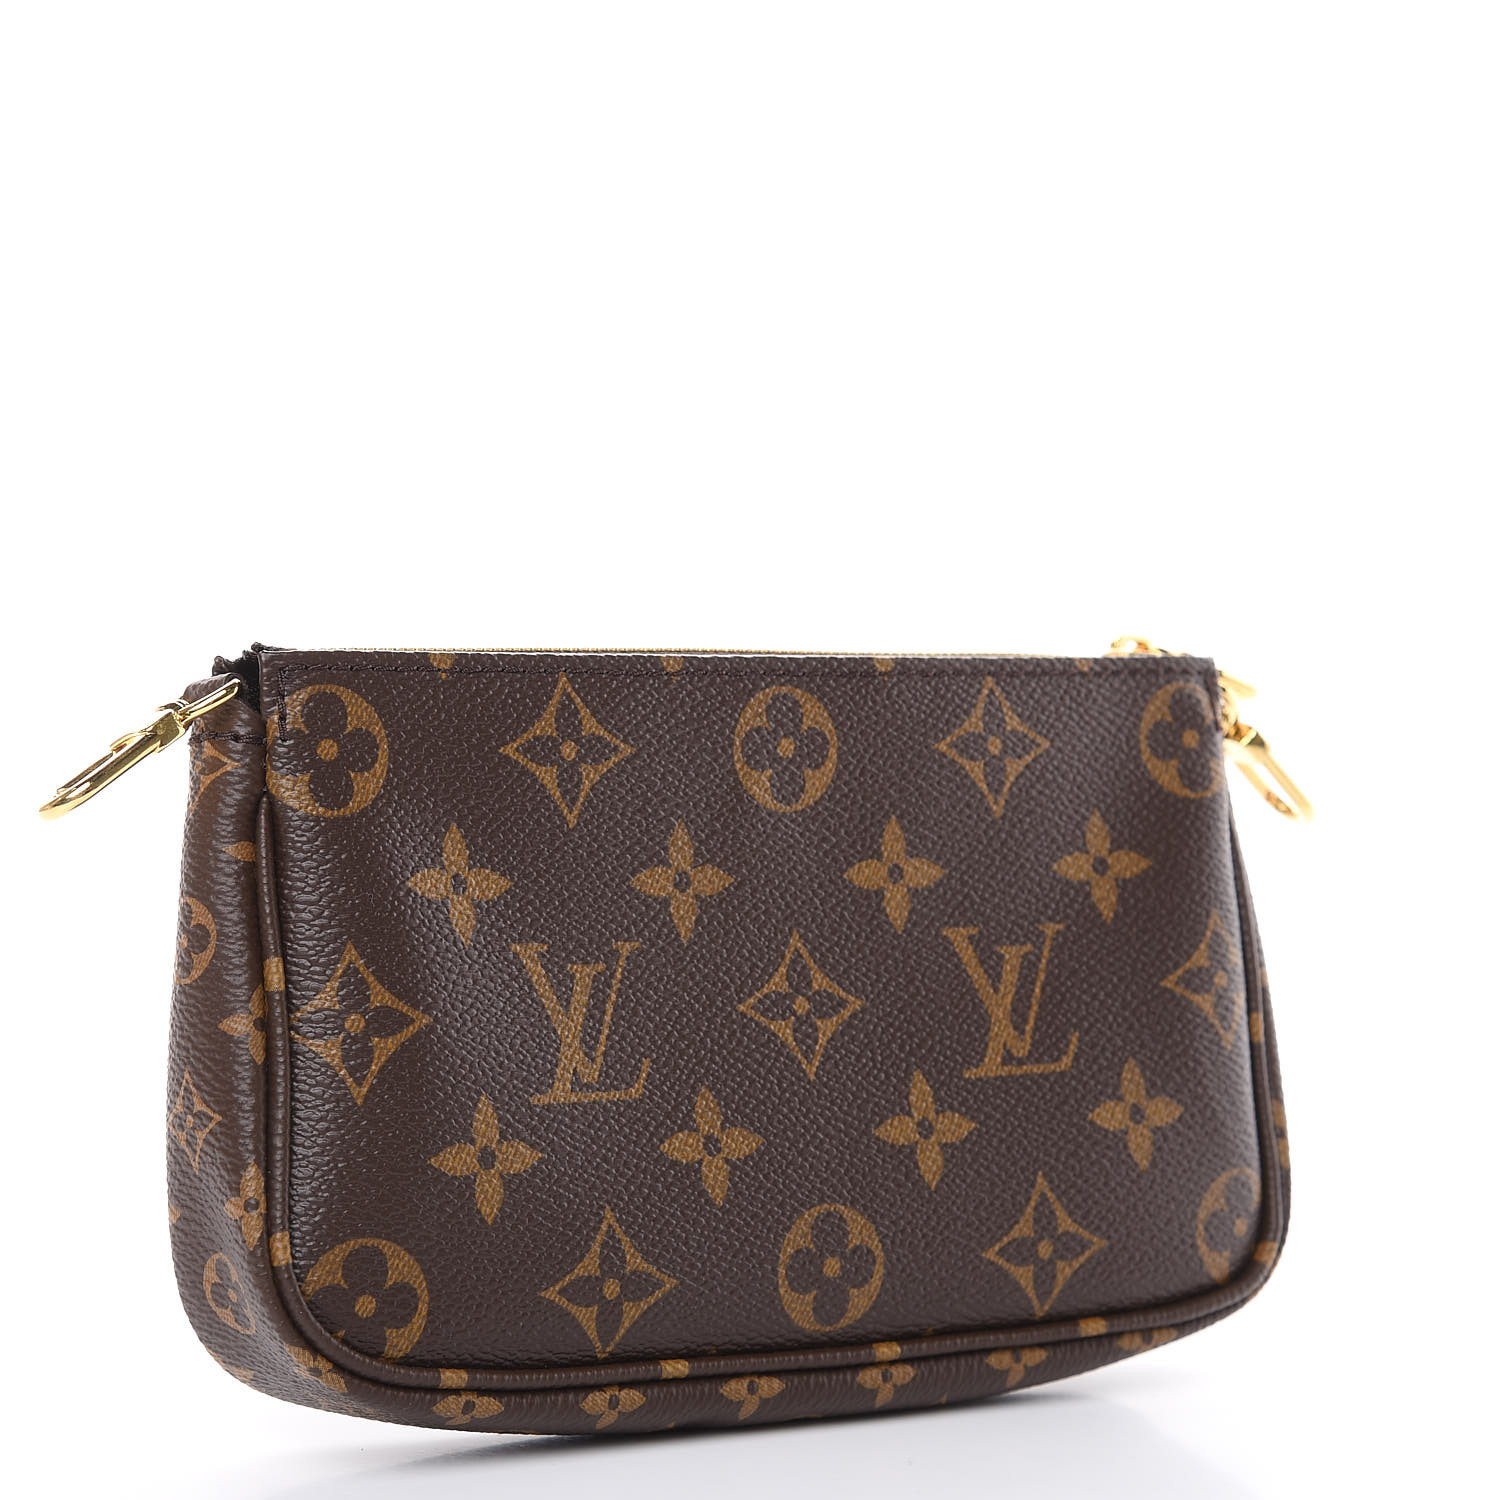 My FIRST Louis Vuitton Bag Unboxing - Multi Pochette Accessoire in  Empreinte Leather 